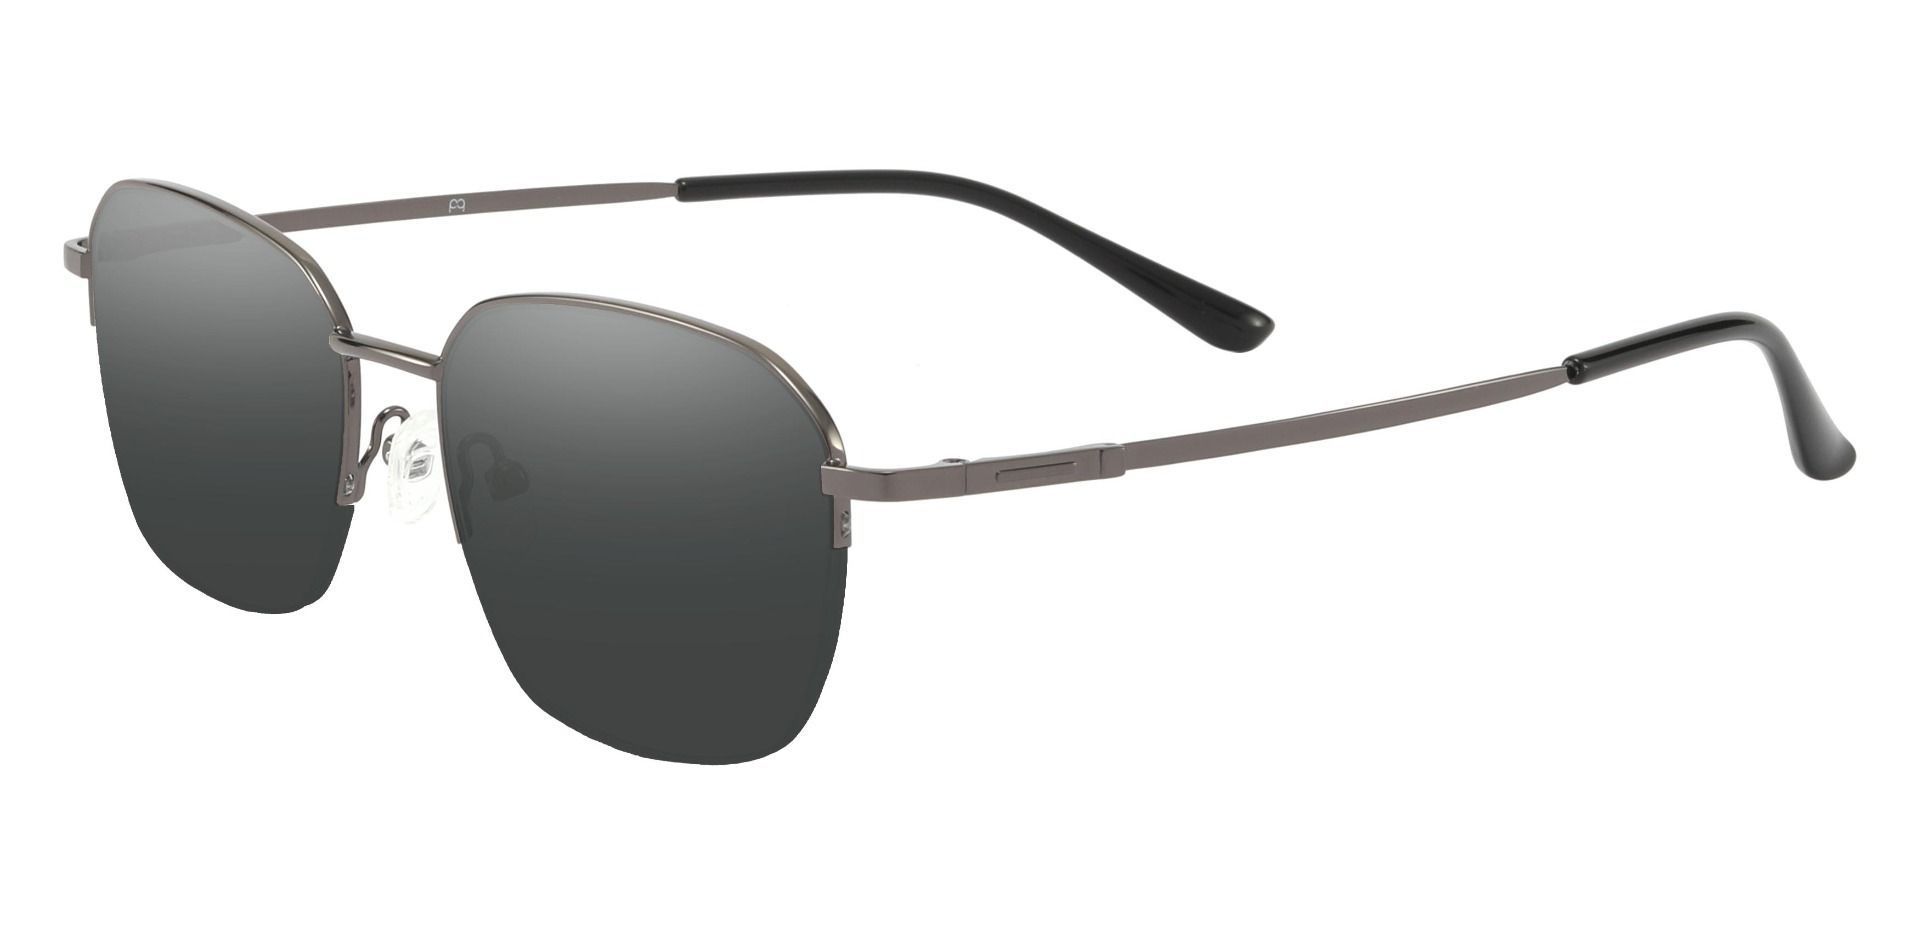 Wilton Geometric Prescription Sunglasses - Gray Frame With Gray Lenses